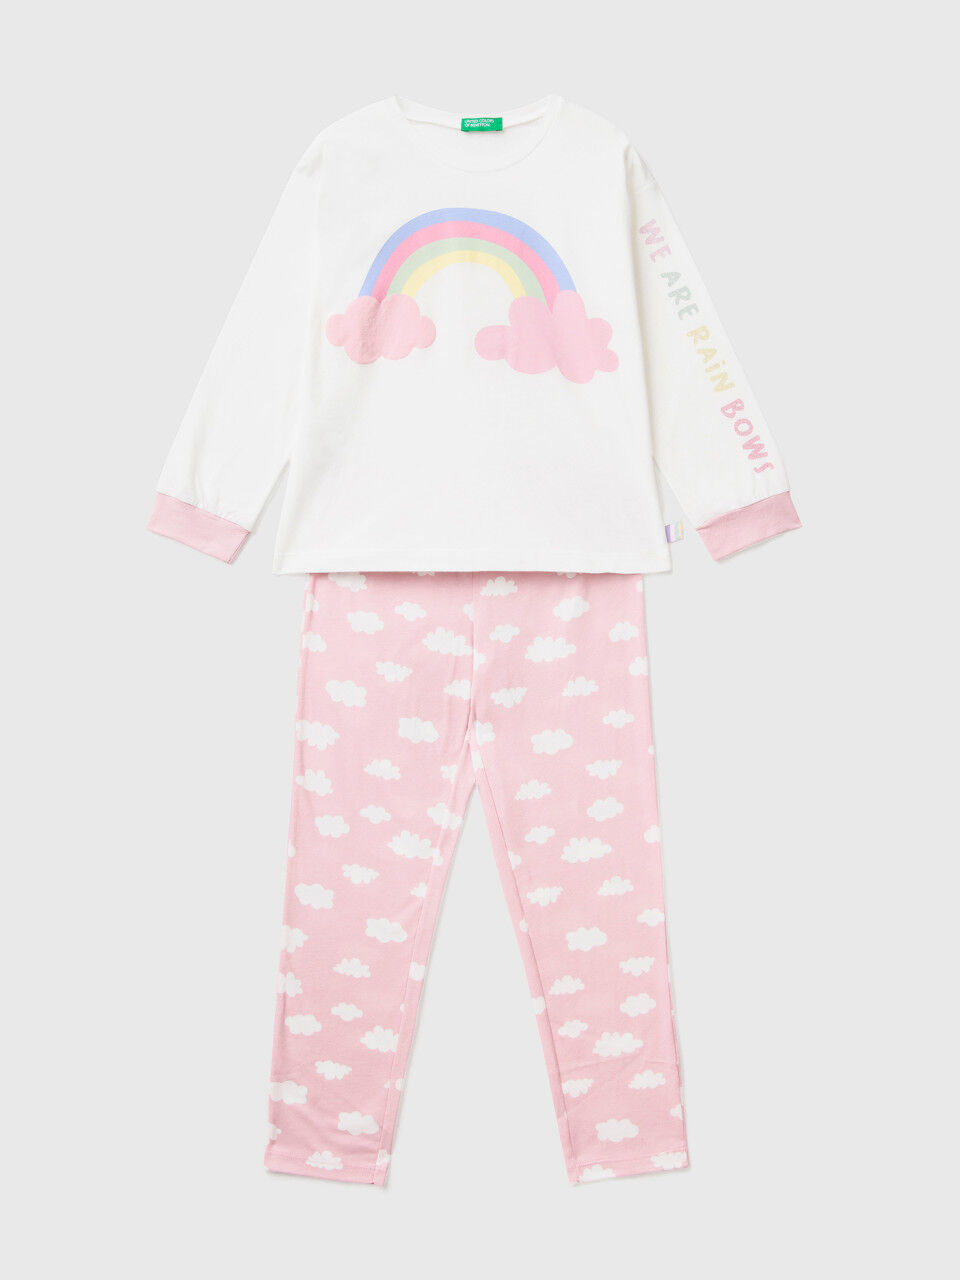 Pyjamas with glittery print